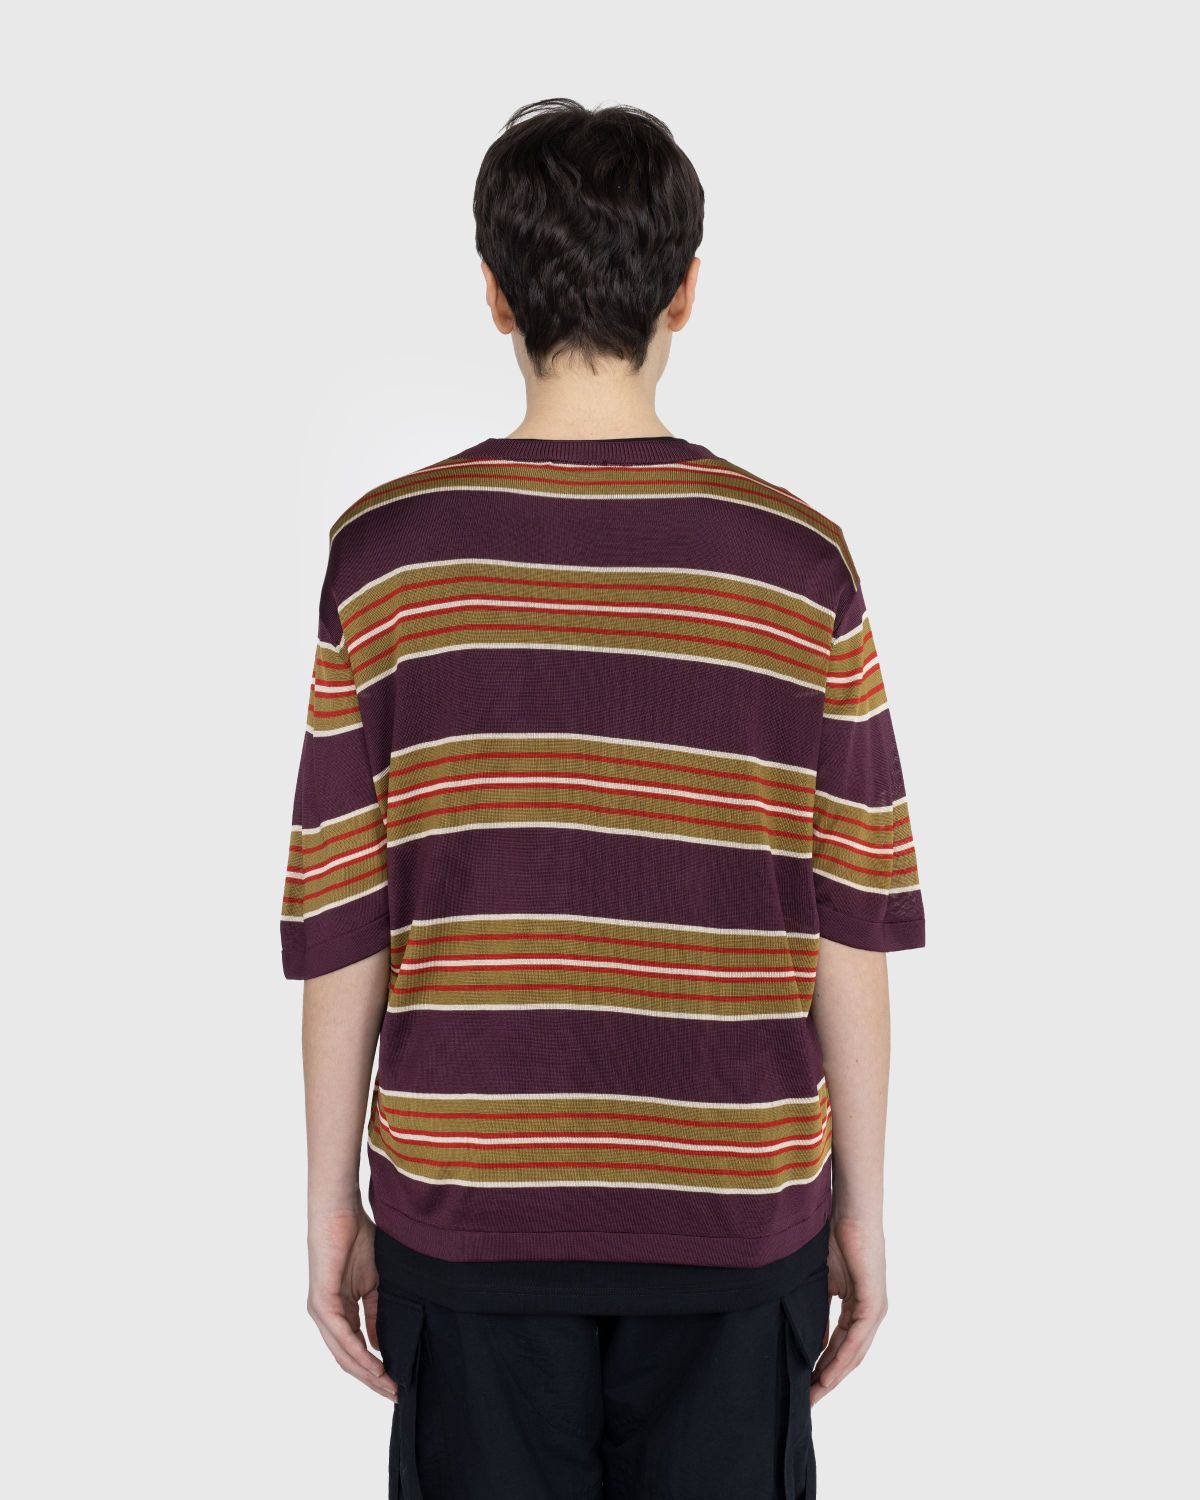 Dries van Noten – Mias Knit T-Shirt Burgundy - T-Shirts - Red - Image 4